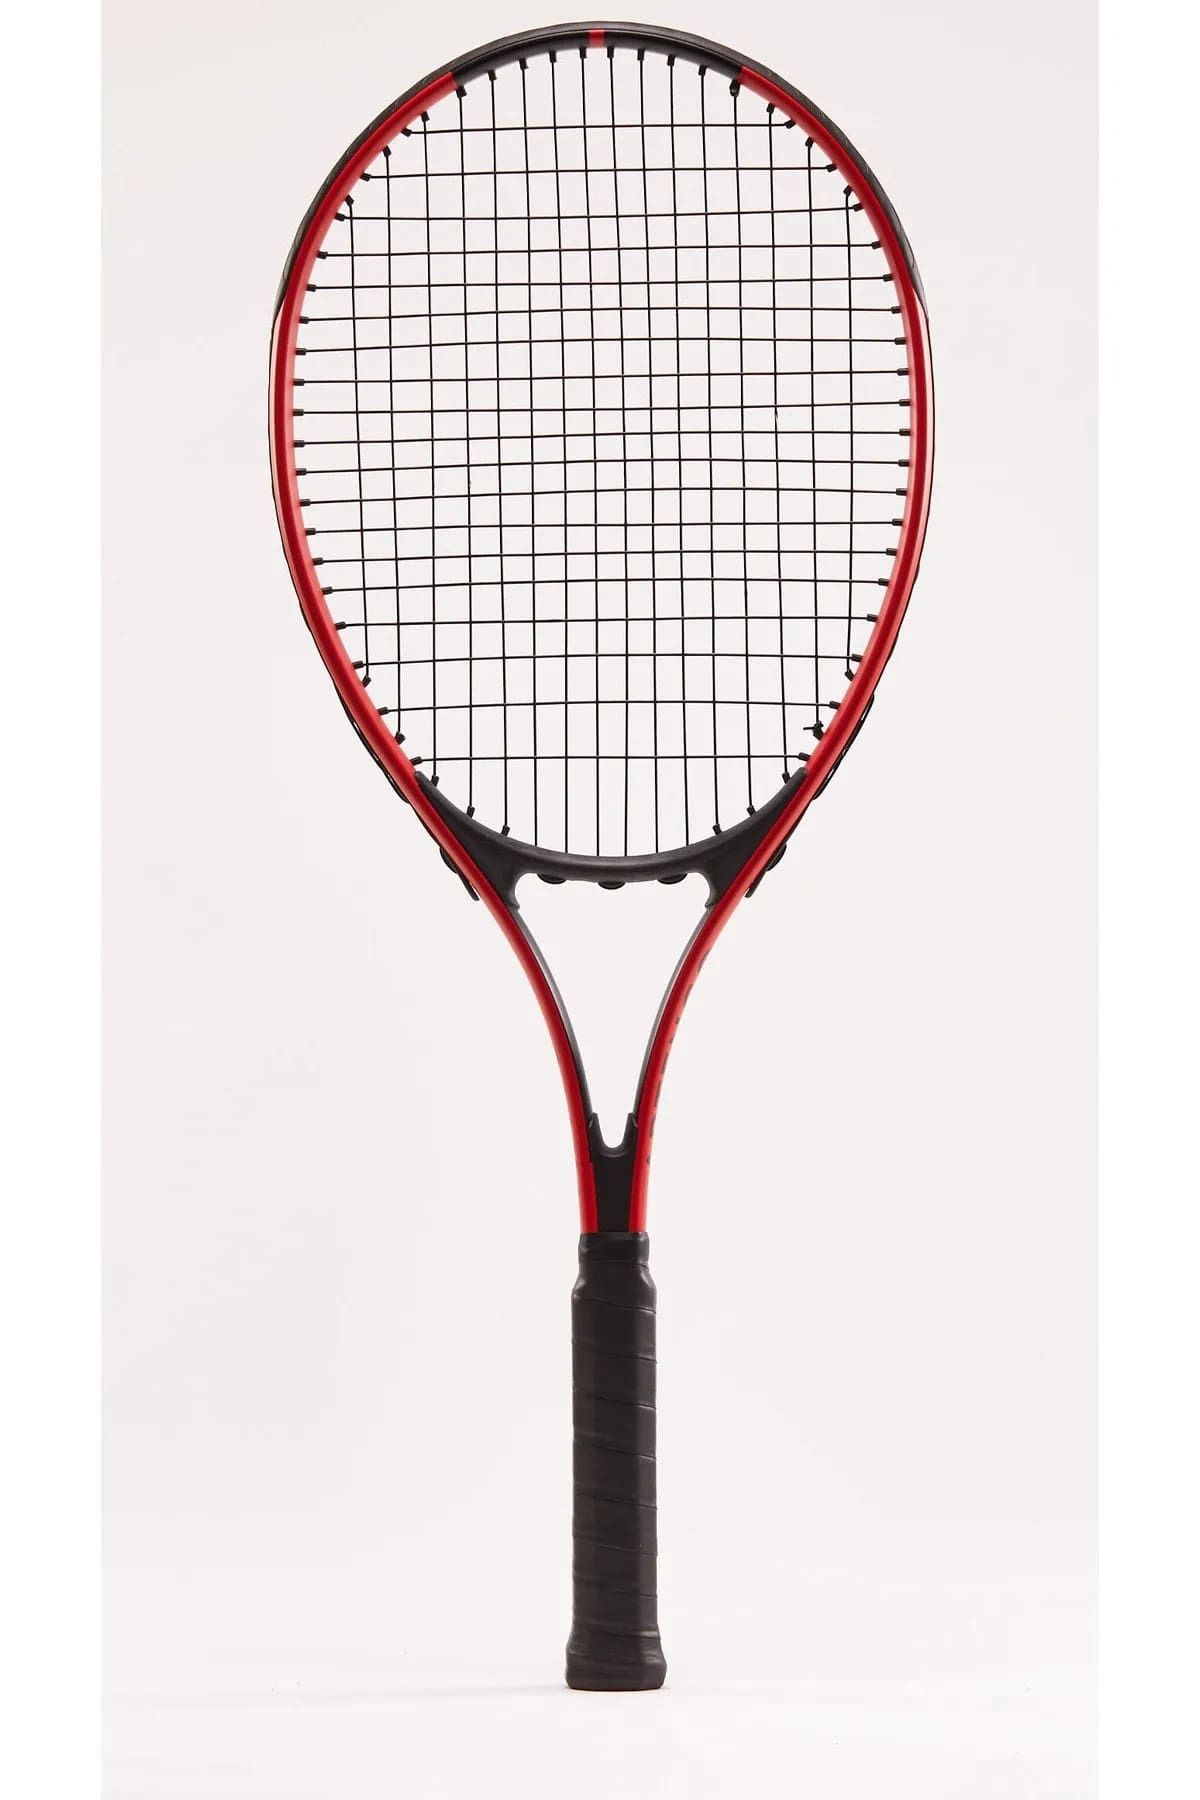 Decathlon 37 inch Artengo 270 Gr L1 Yetişkin Tenis Raketi - Artengo Tr110 270 gr Kırmızı 21 inch